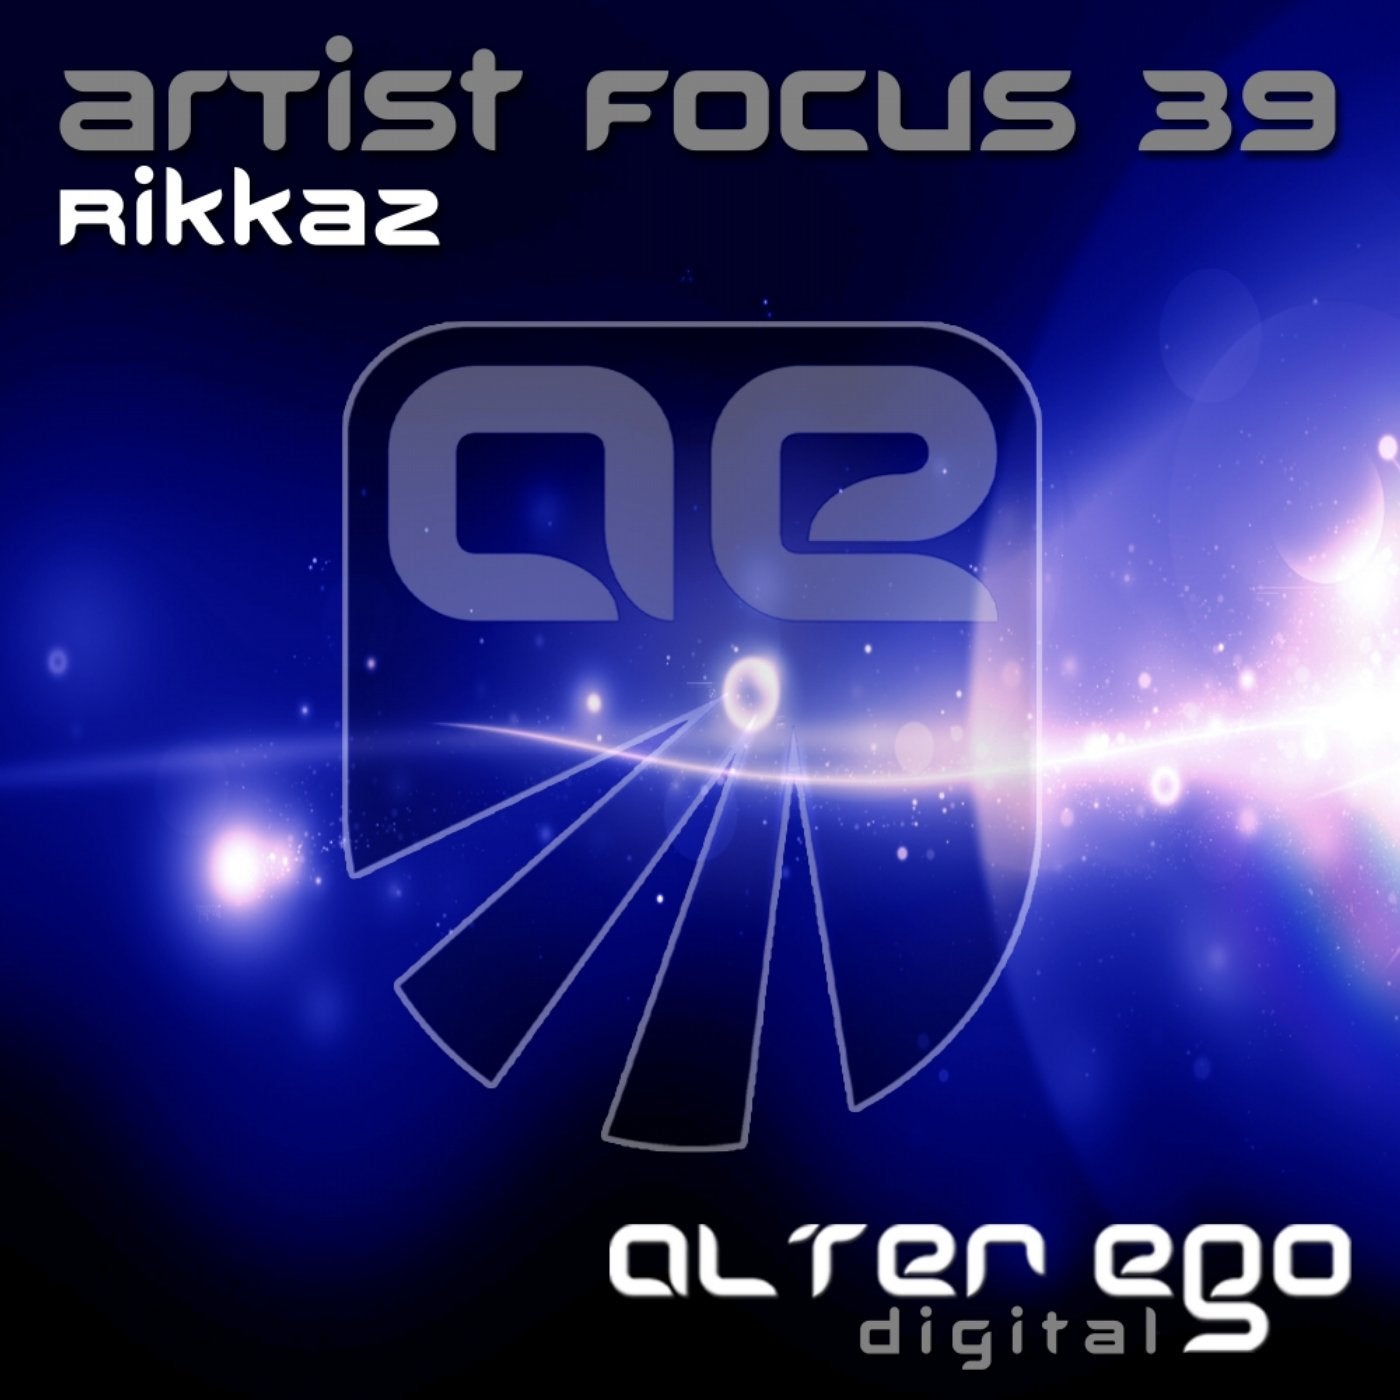 Artist Focus 39